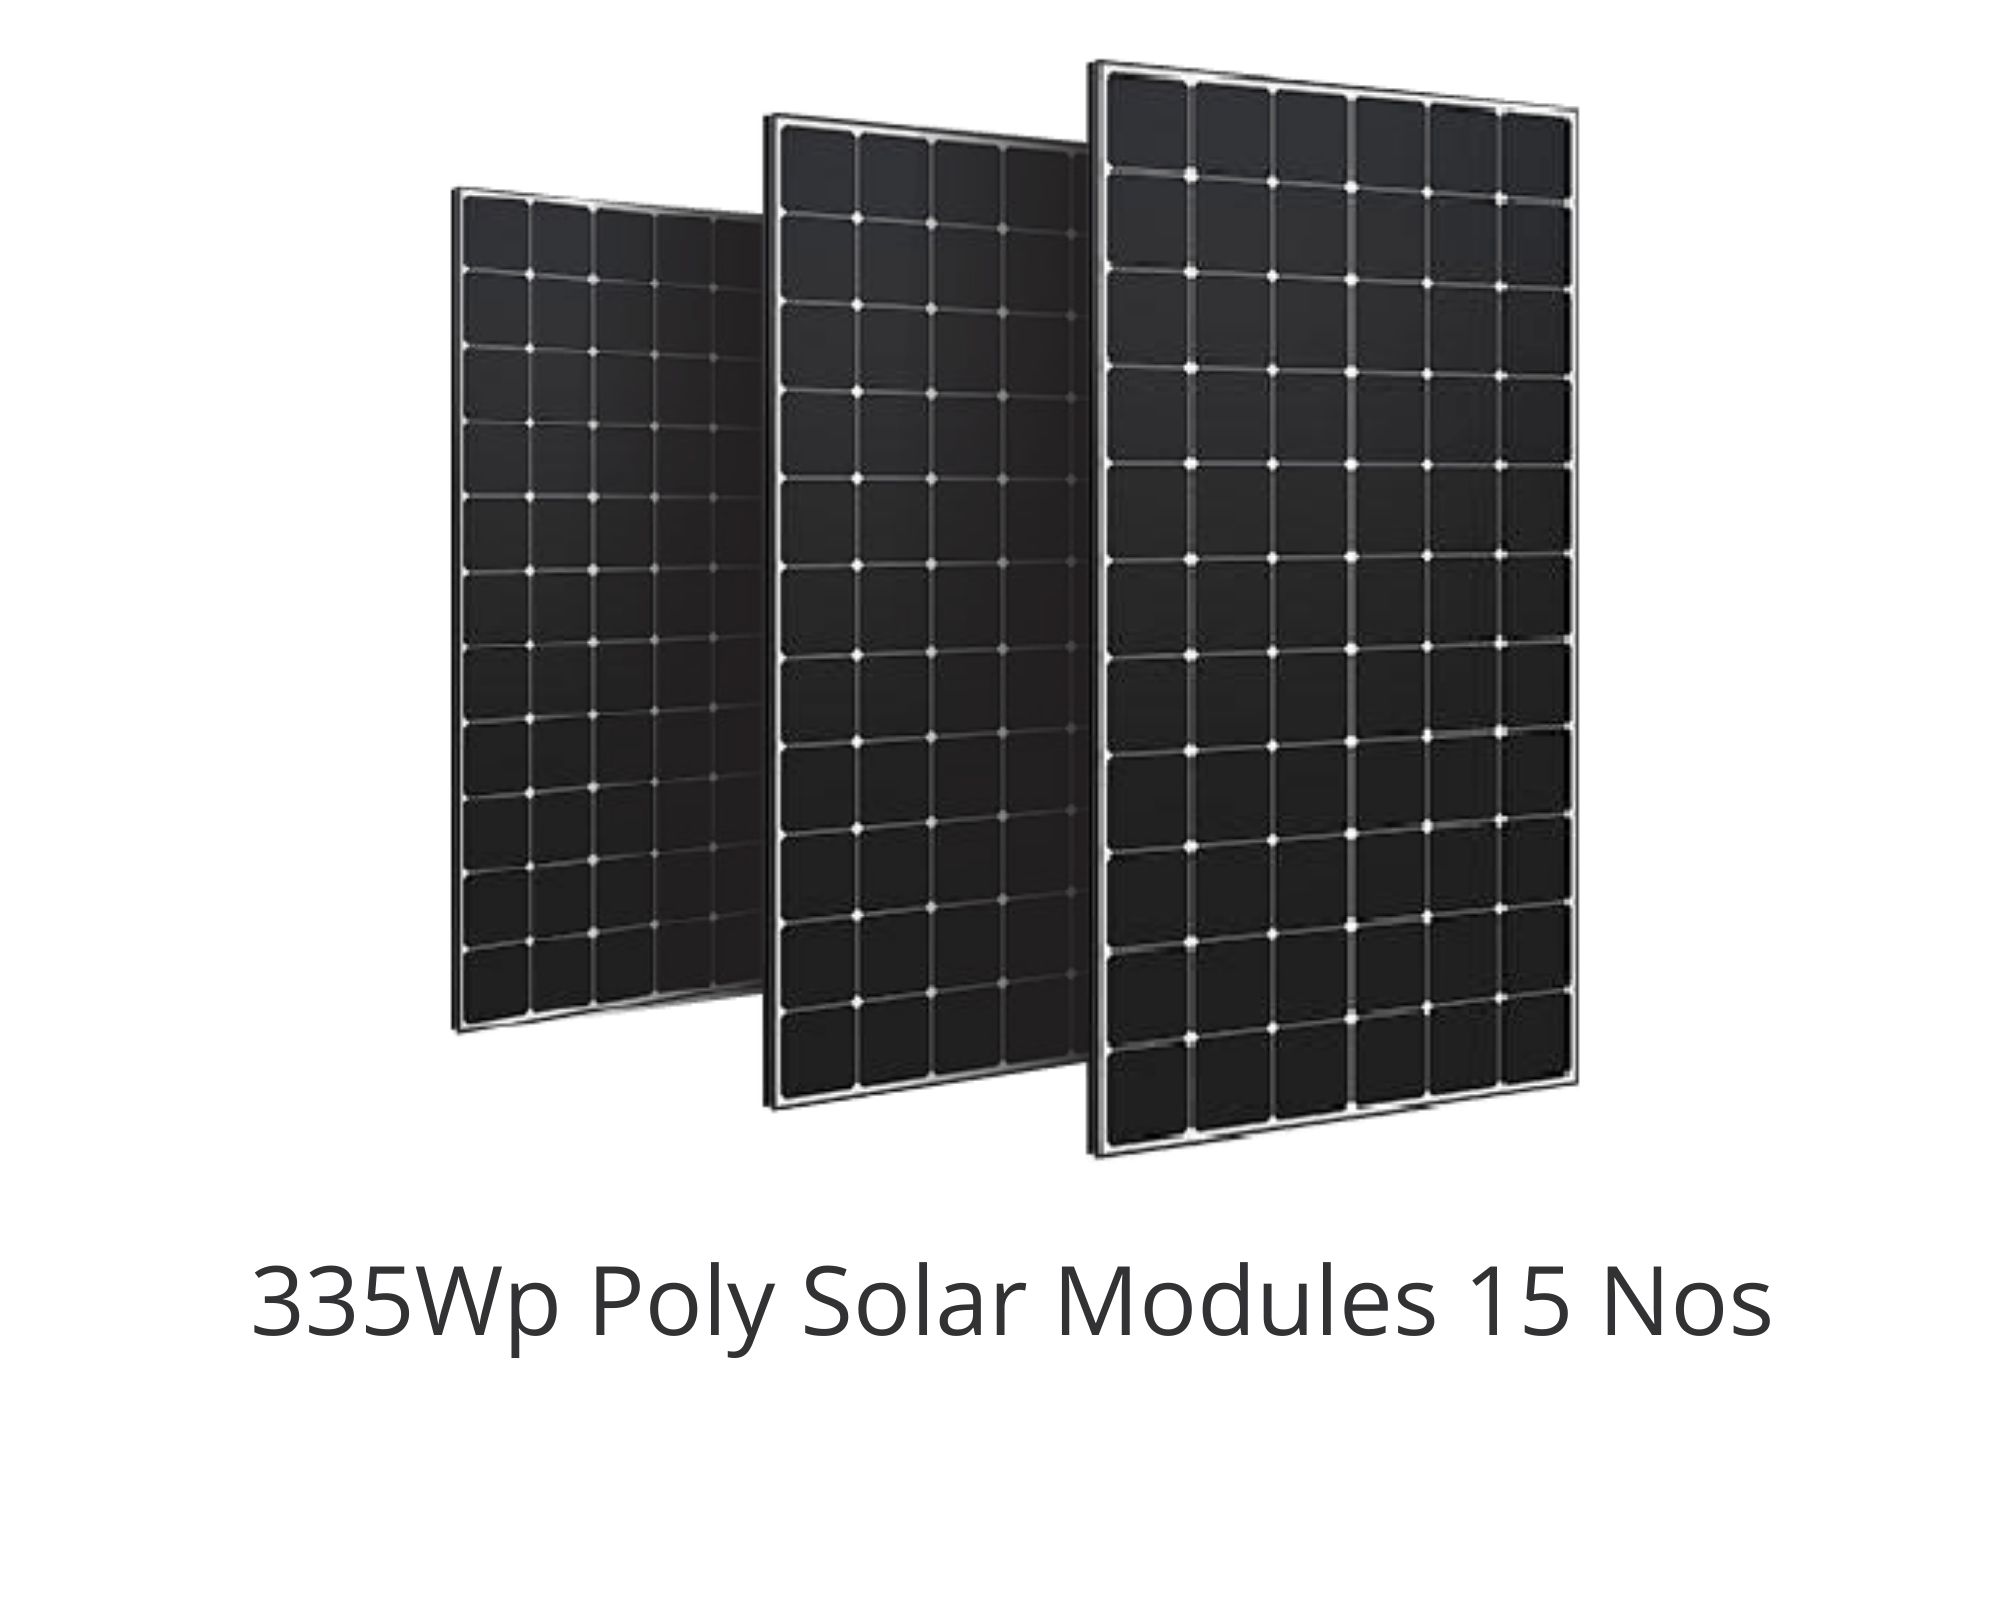 5kw solar modules